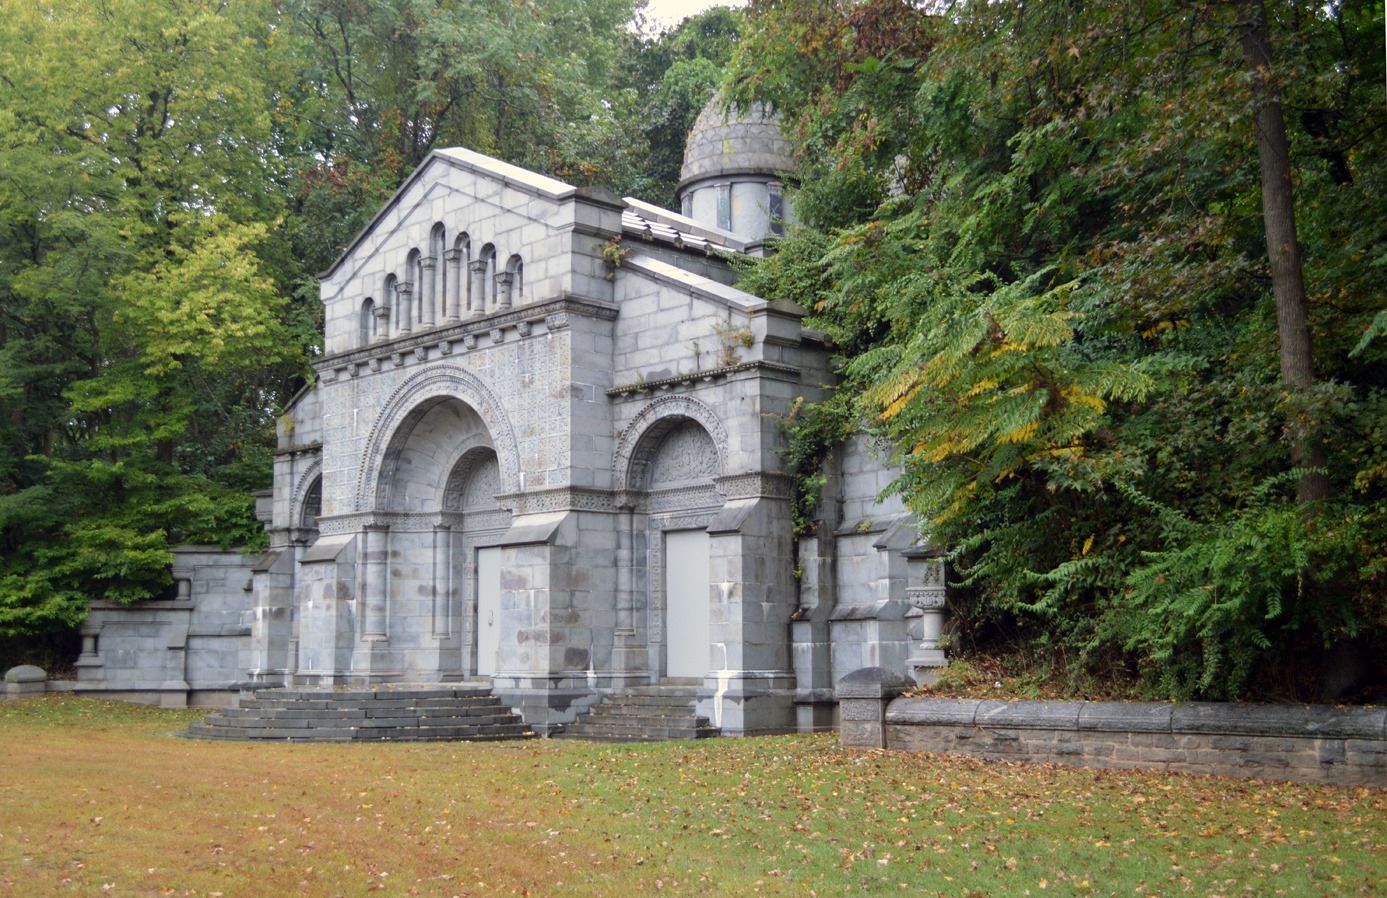 Vanderbilt Family Cemetery And Mausoleum In New Dorp New